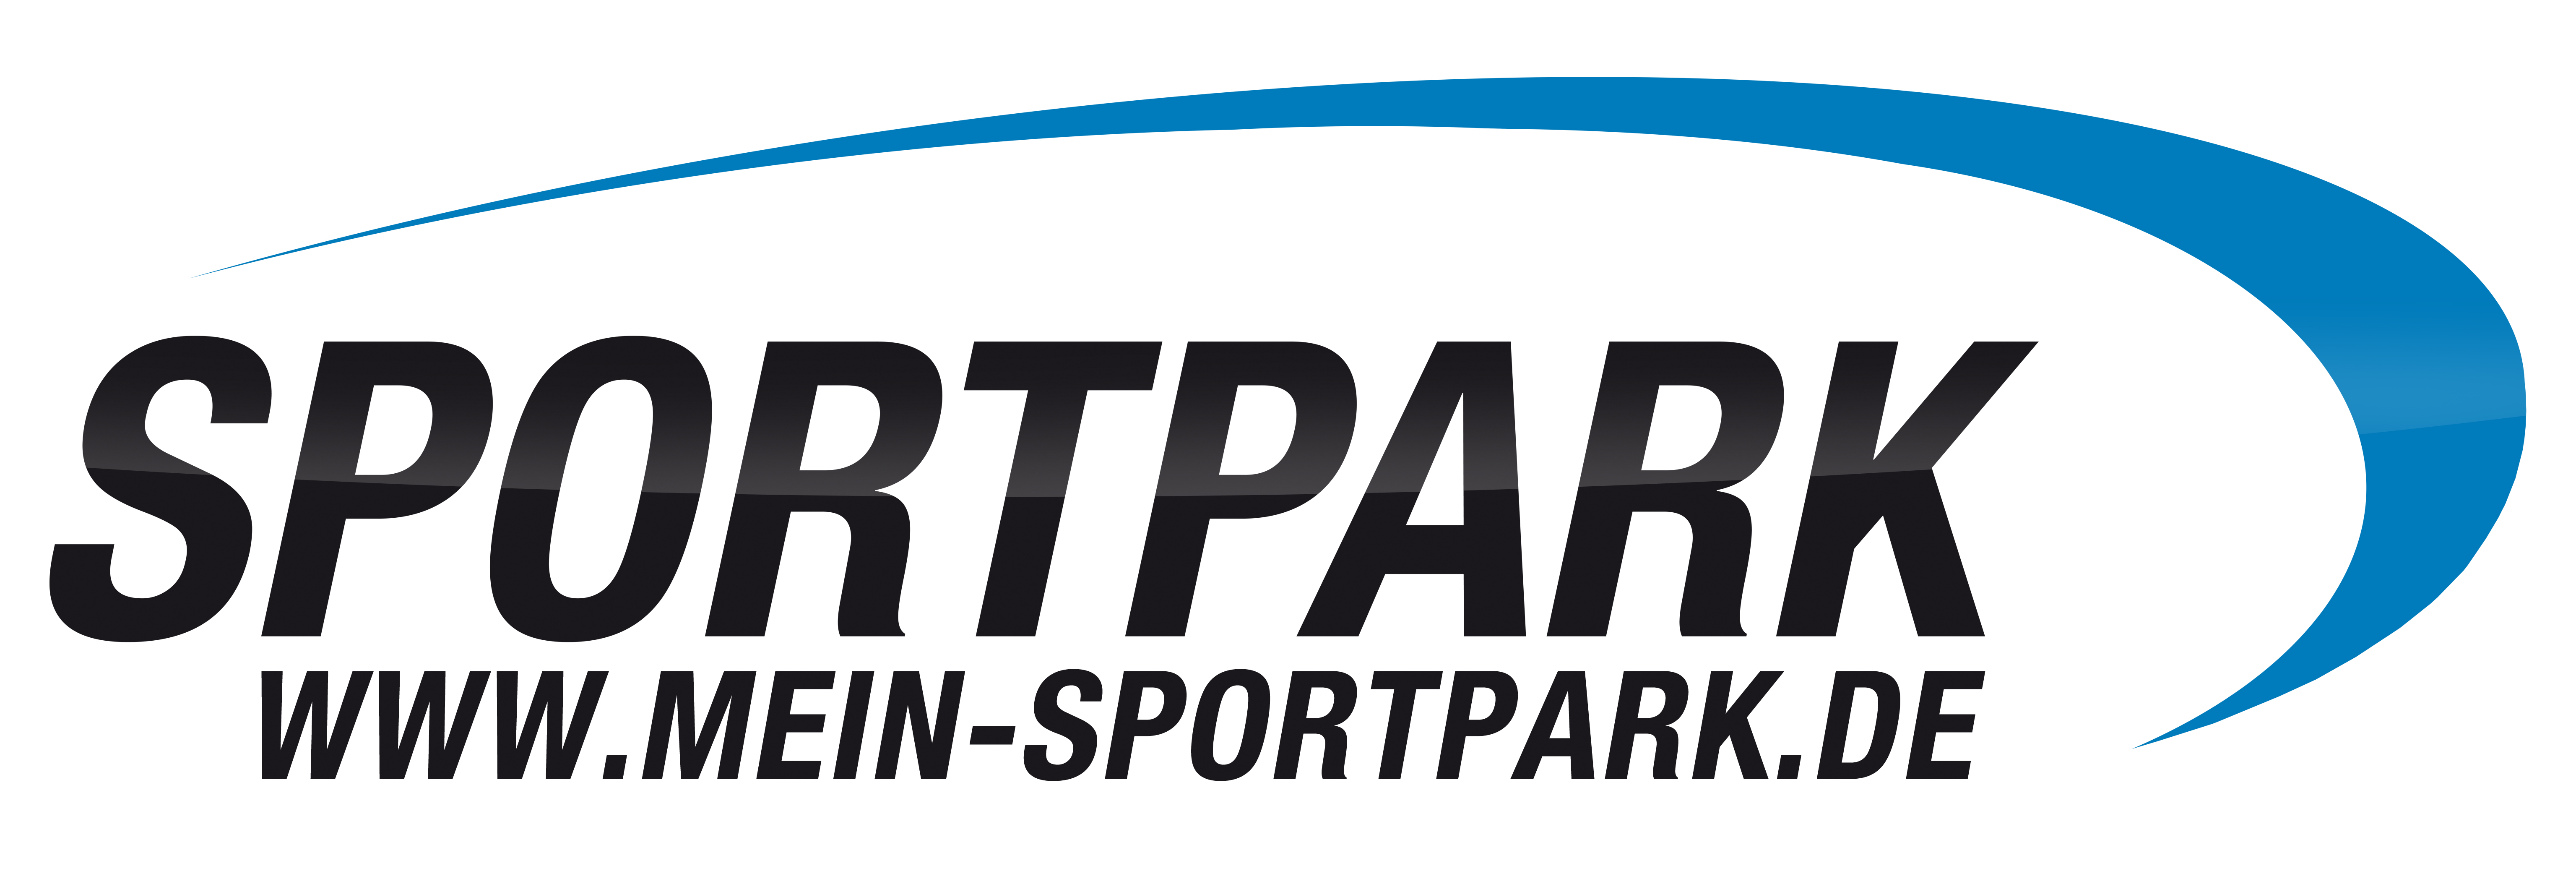 Sportpark Halle - 2x in Halle